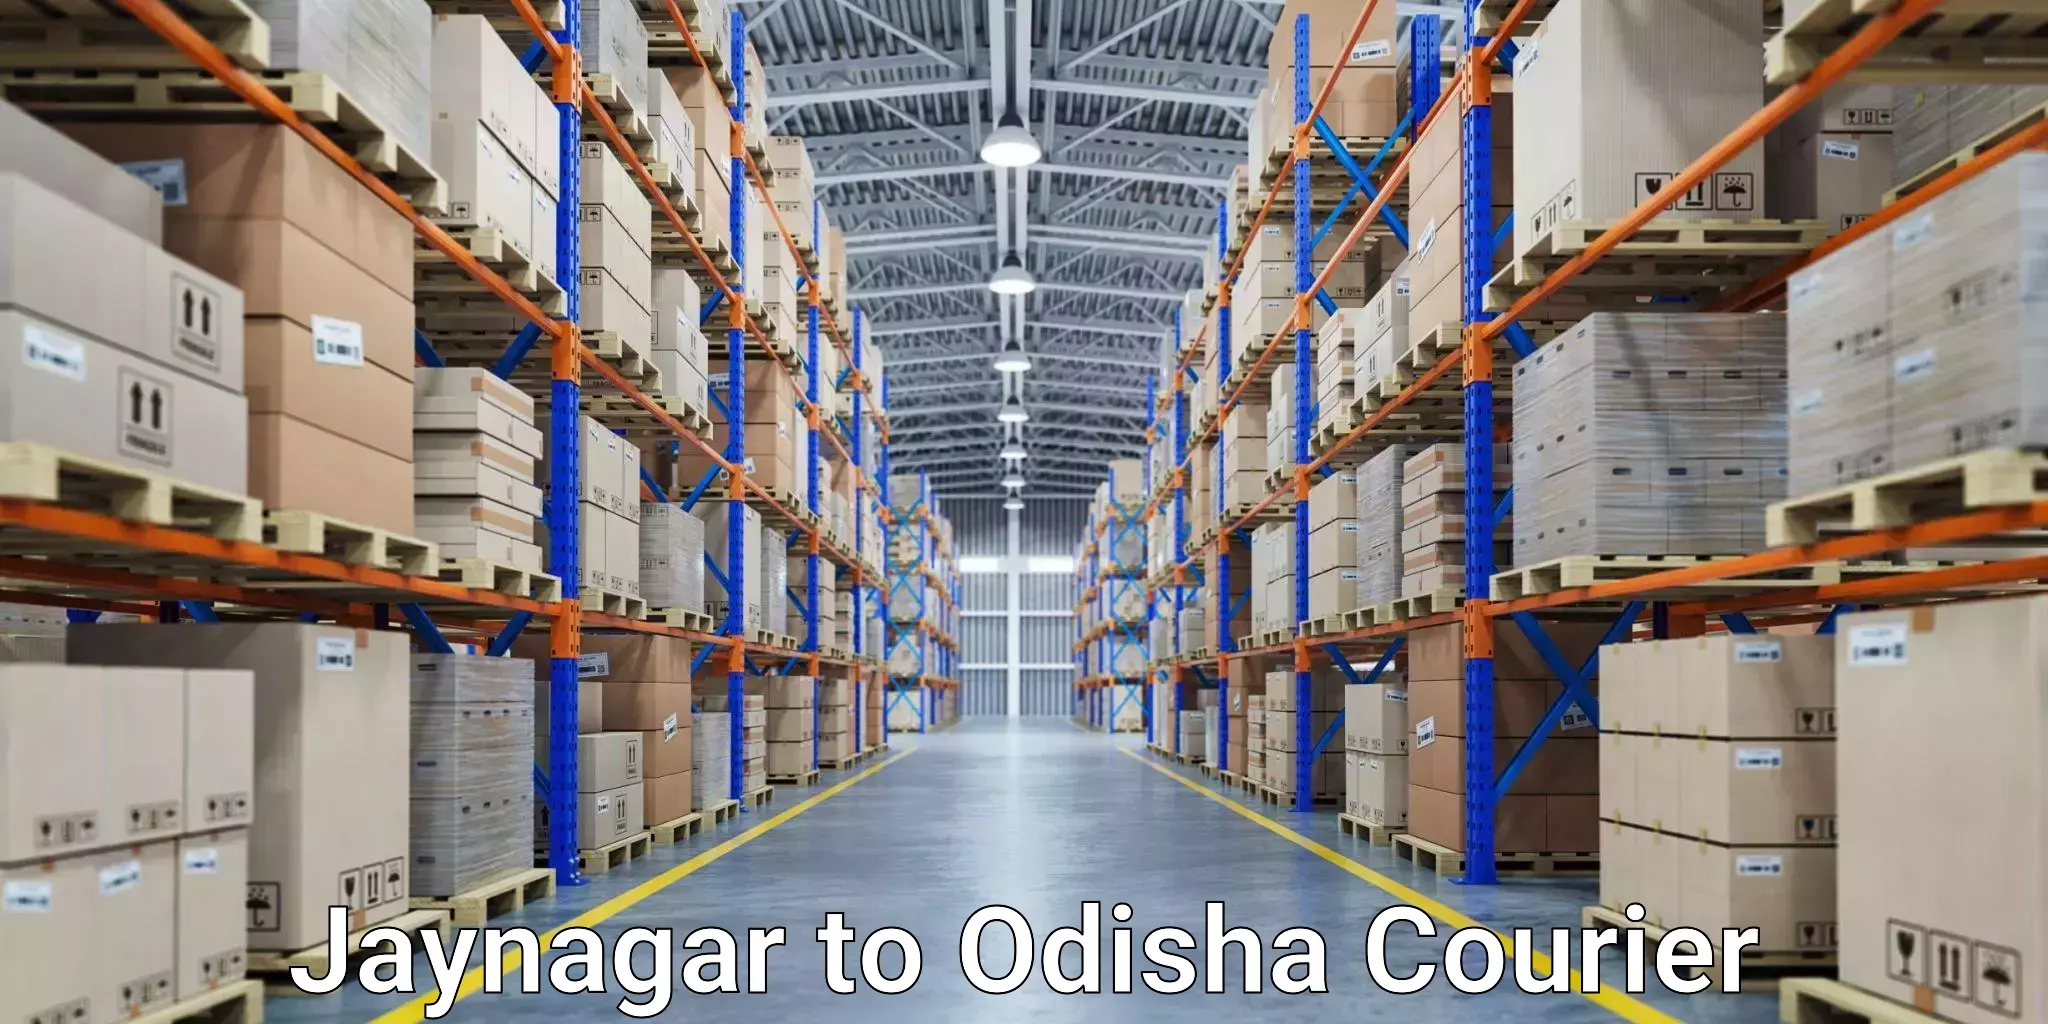 Courier service comparison Jaynagar to Odisha